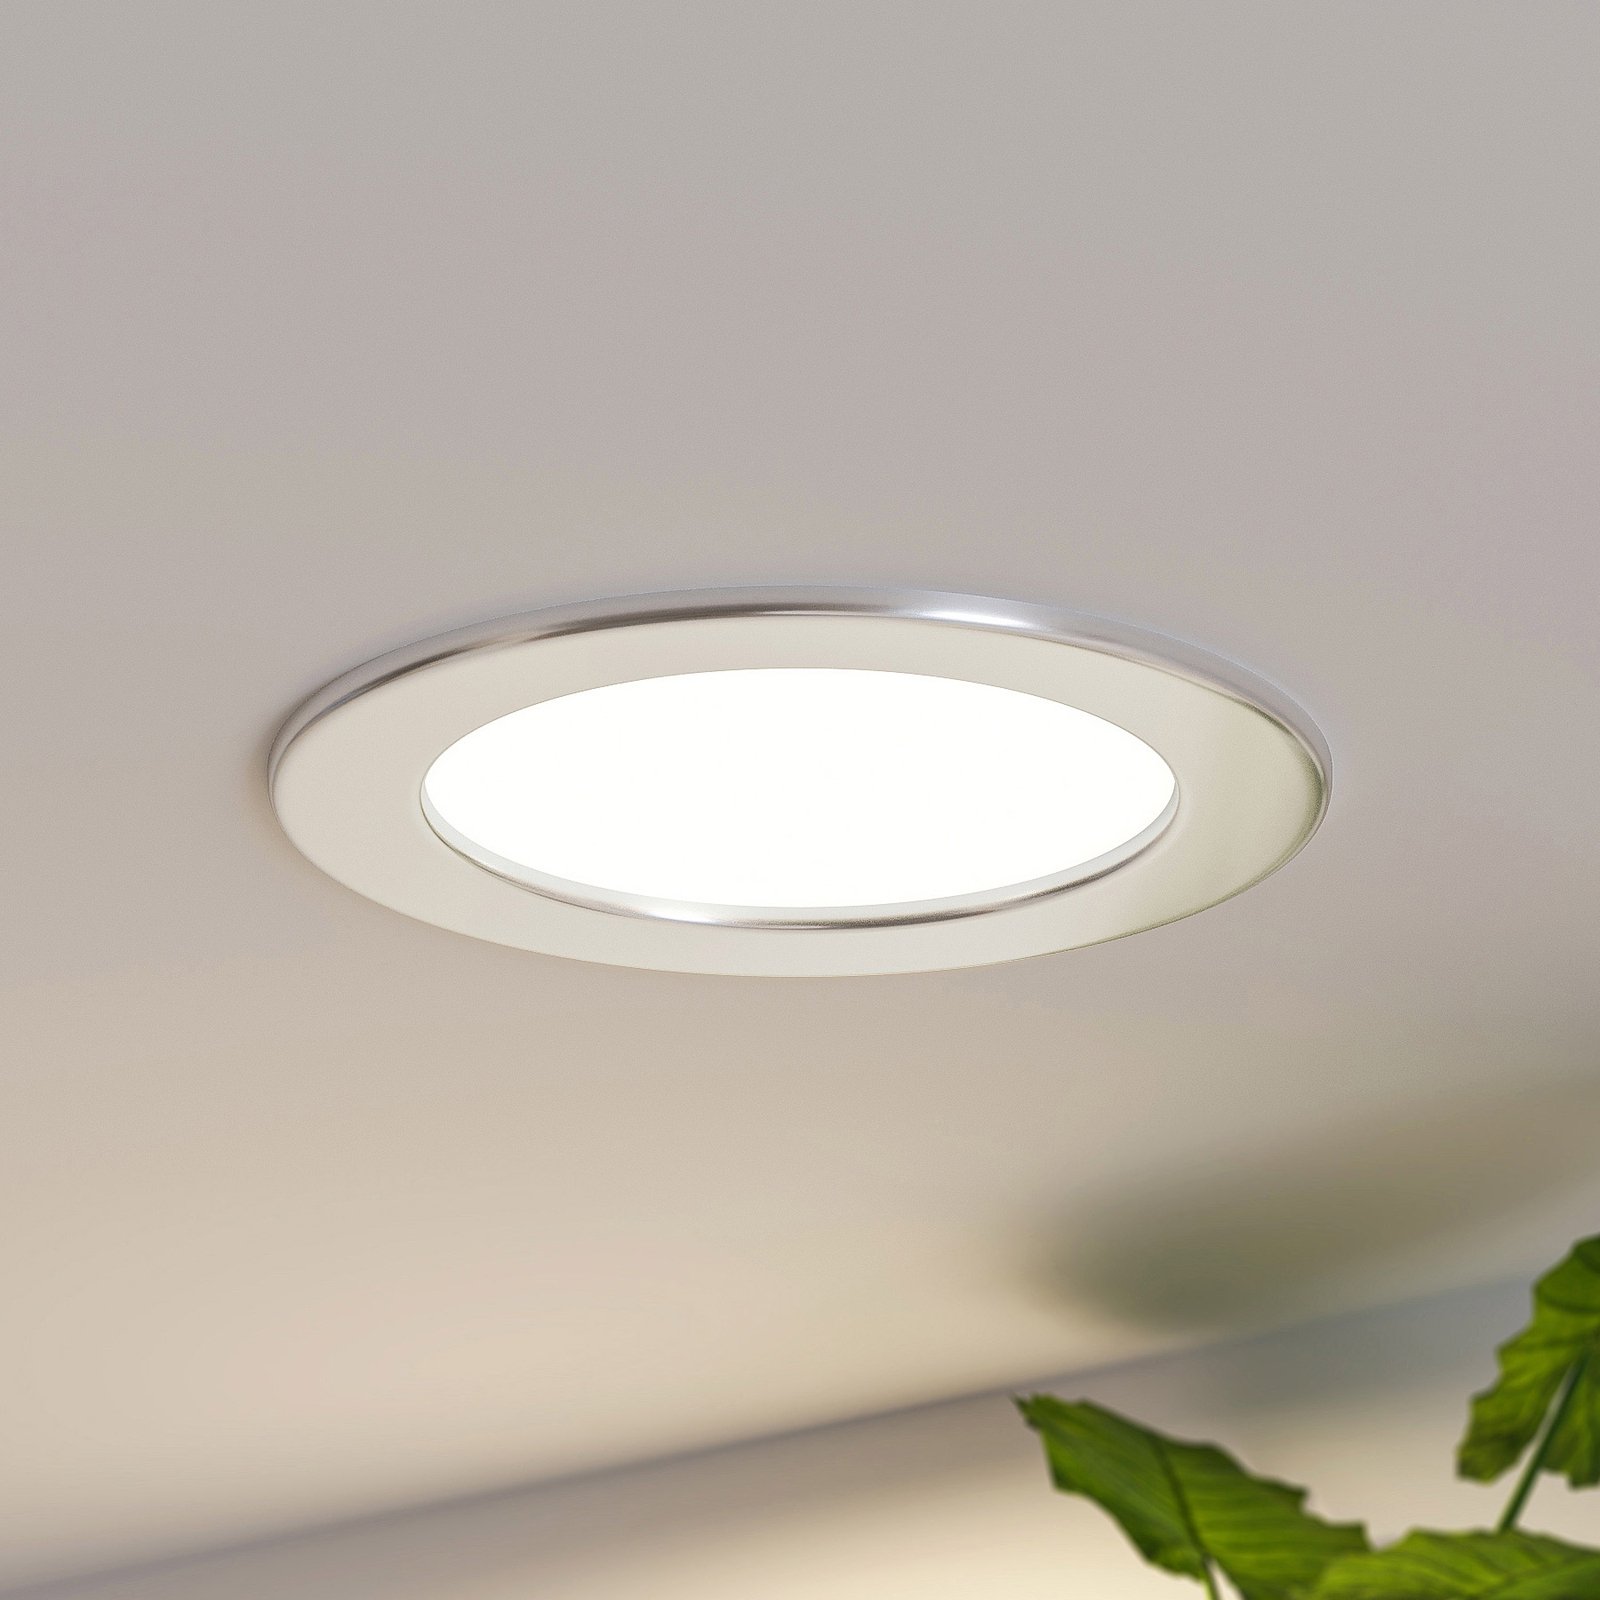 Prios Cadance LED inbouwlamp, zilver, 17 cm